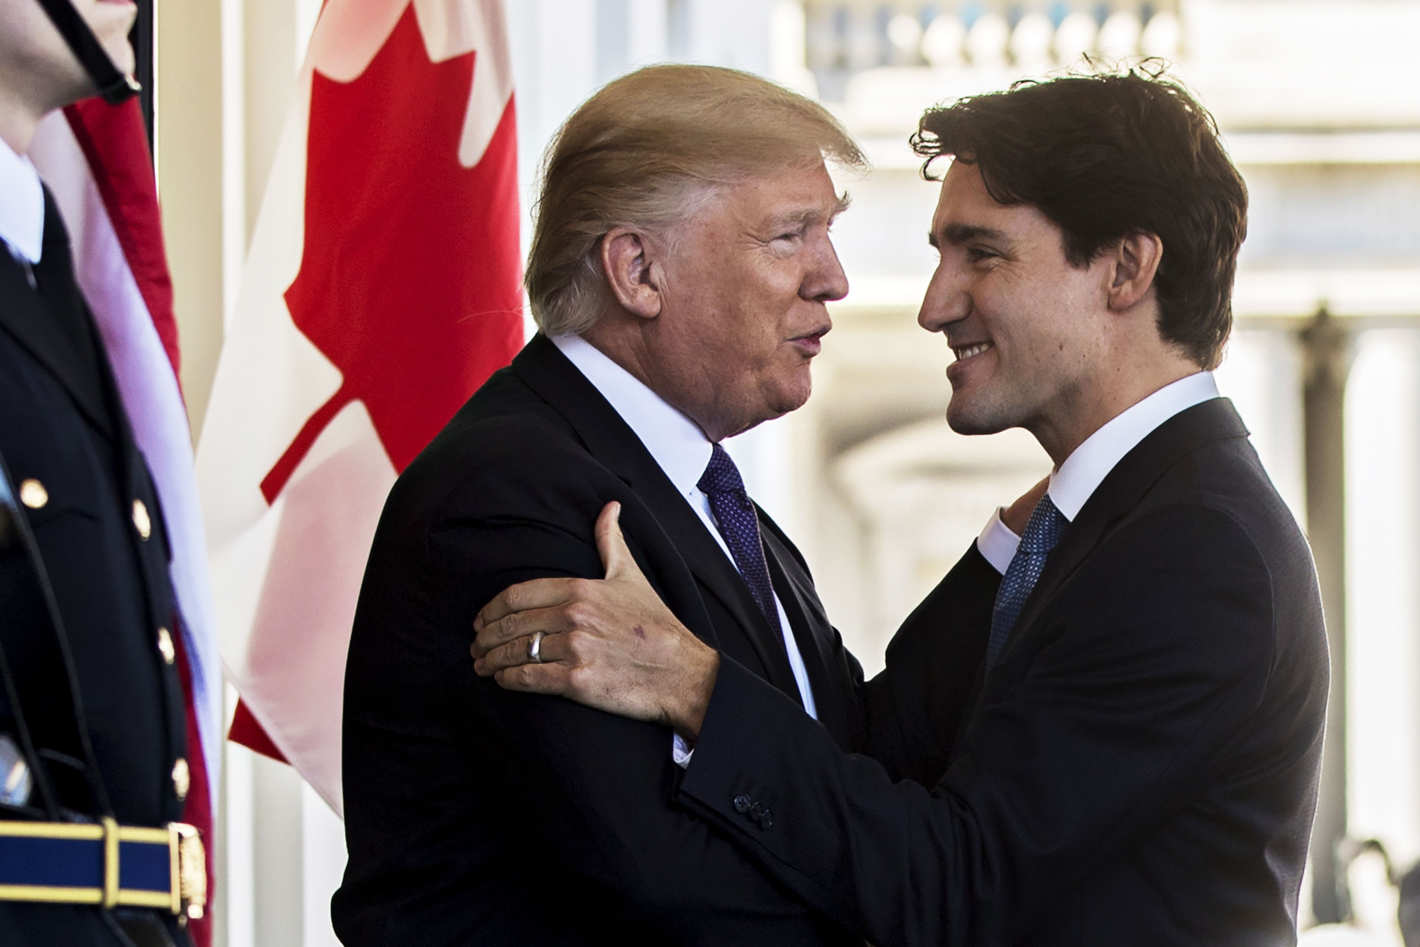 Donald Trump and Justin Trudeau embrace